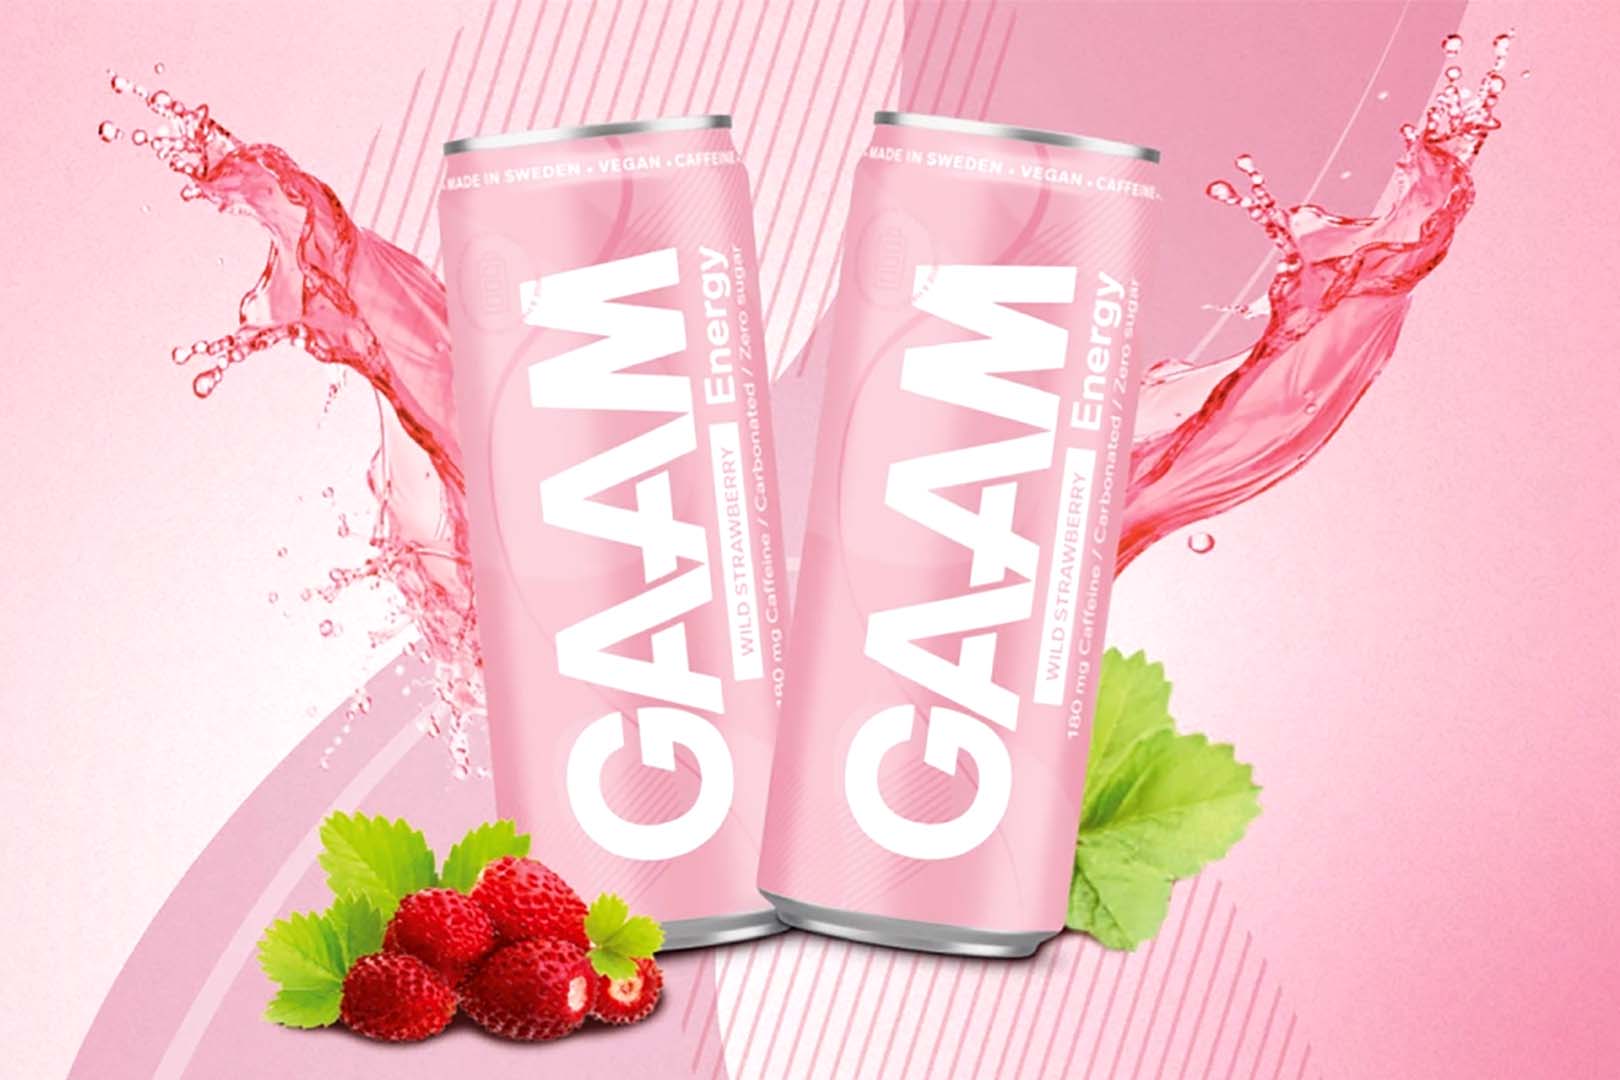 Wild Strawberry Gaam Energy Drink